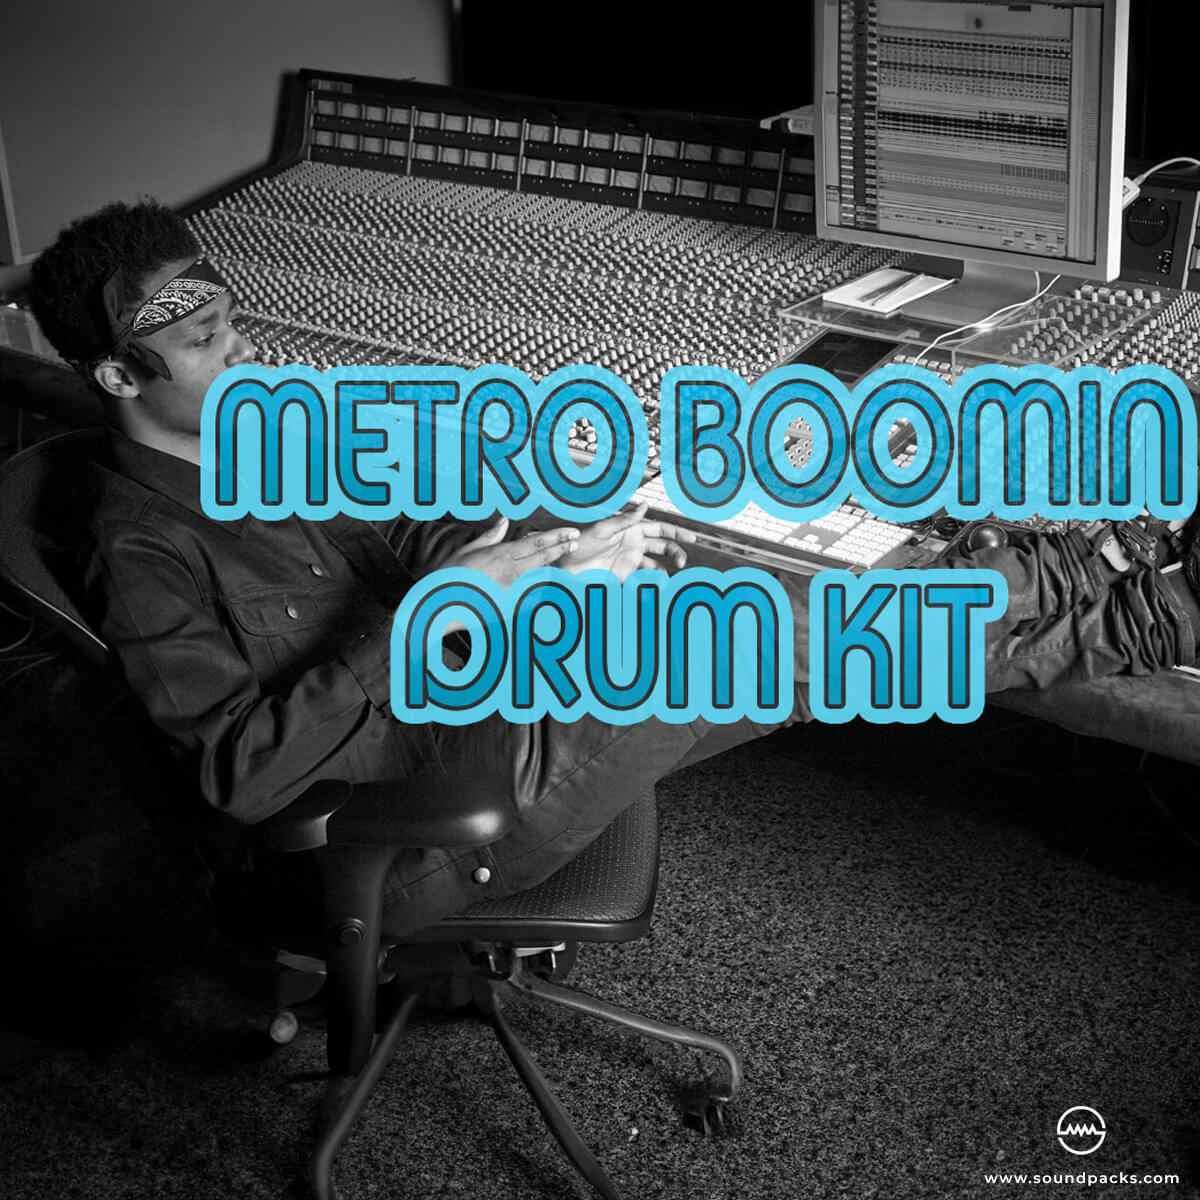 Metro Boomin Drum Kit